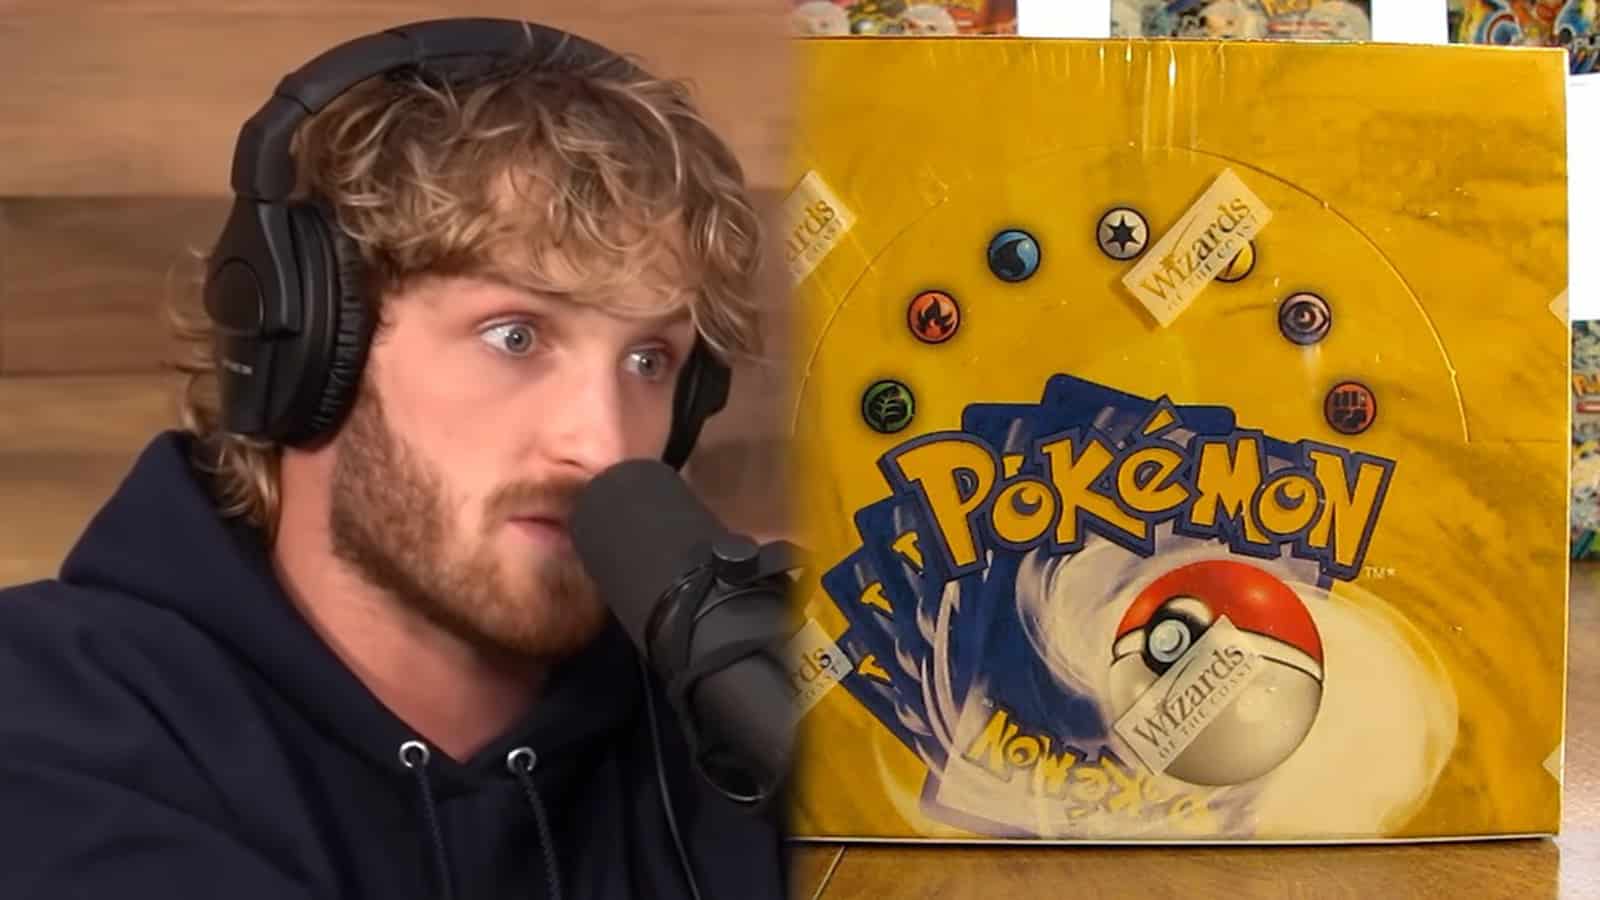 YouTuber Logan Paul next to Pokemon Trading Card game box